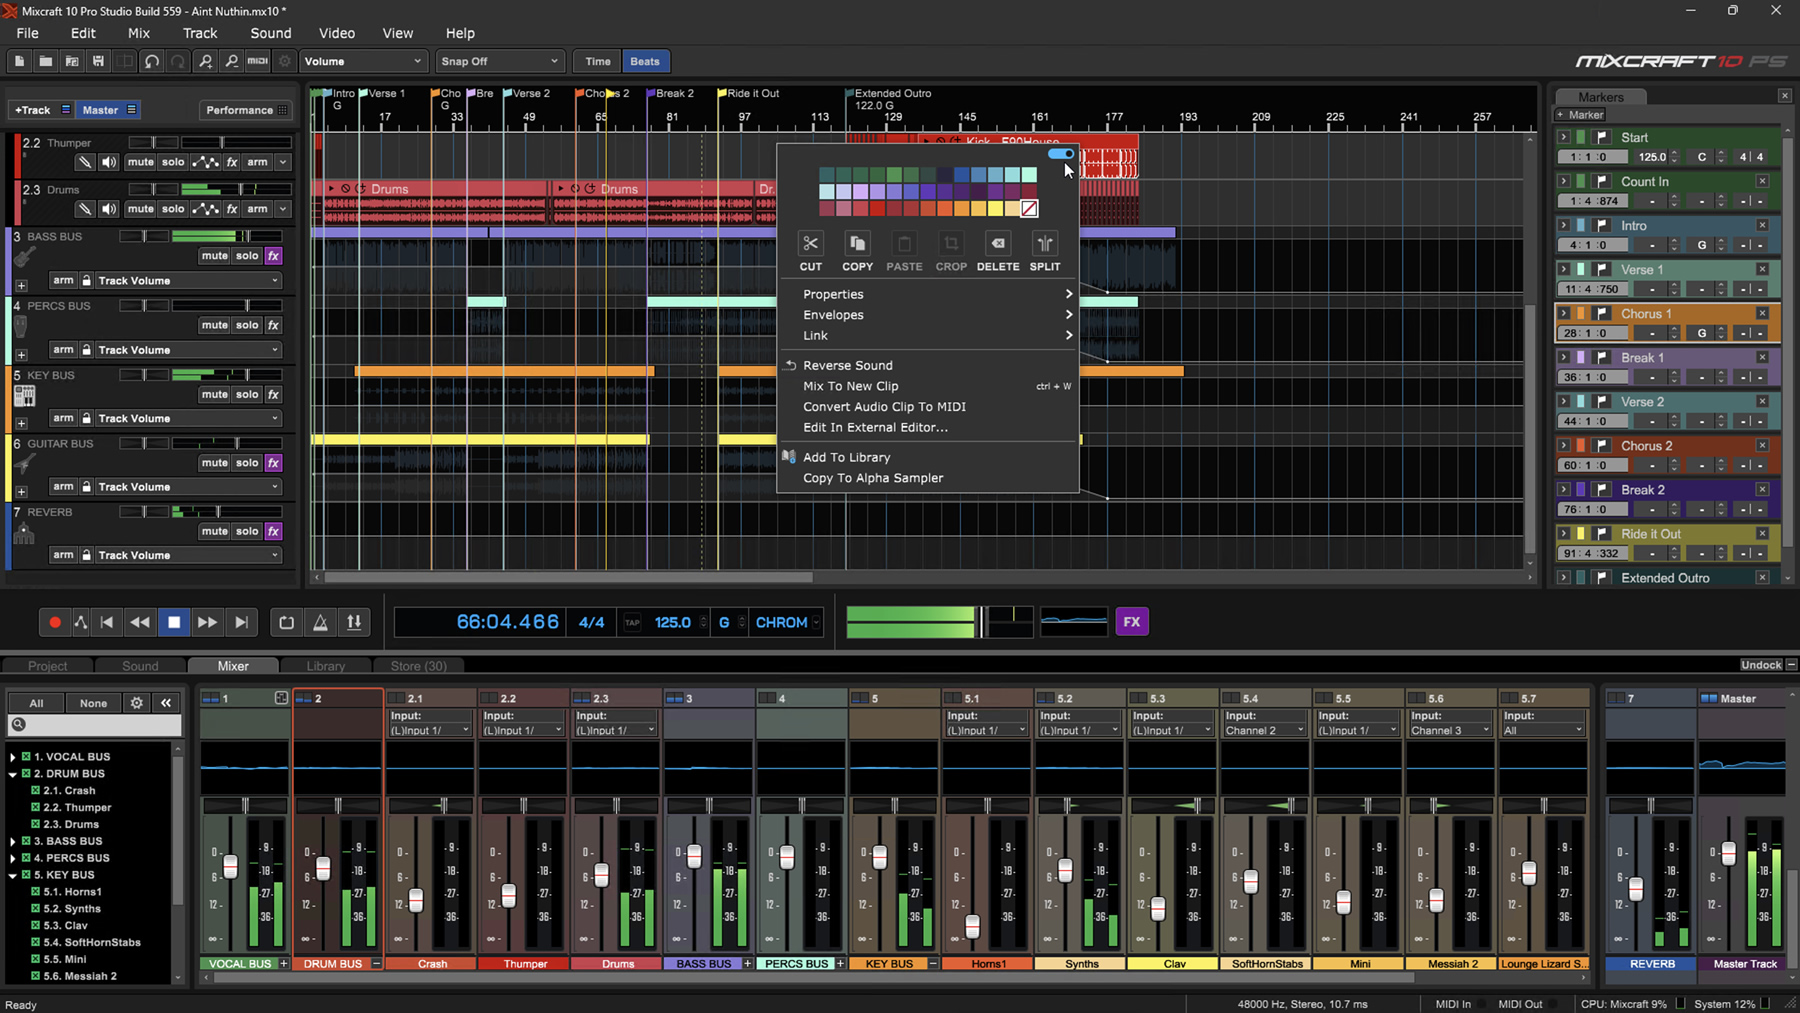 Acoustica Mixcraft 10 Pro Studio (Download)